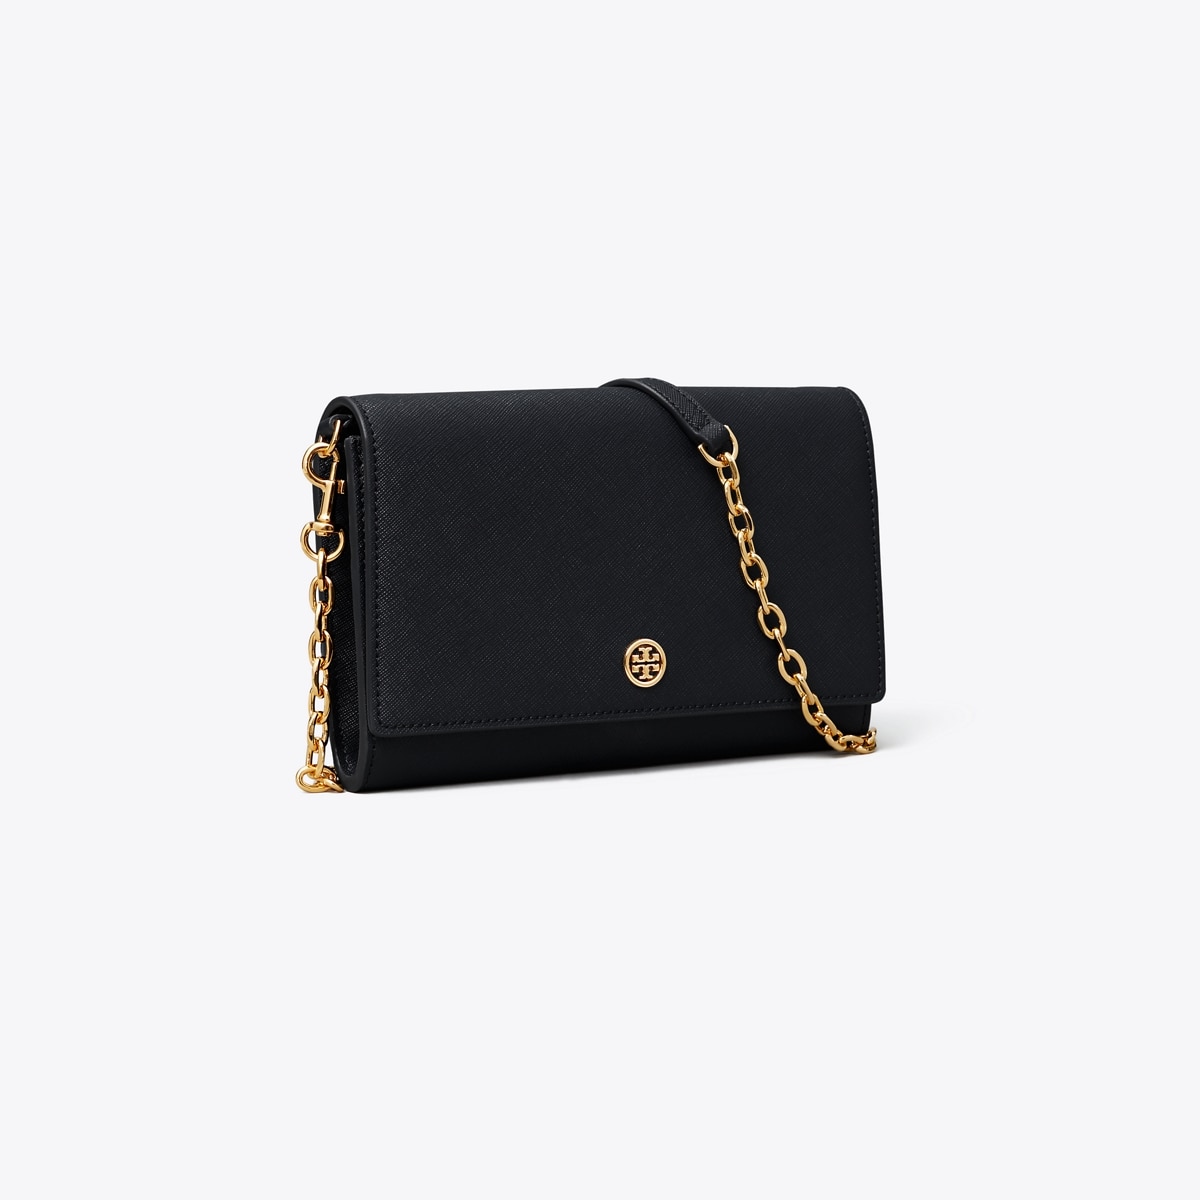 Robinson Chain Wallet: Women's Handbags 